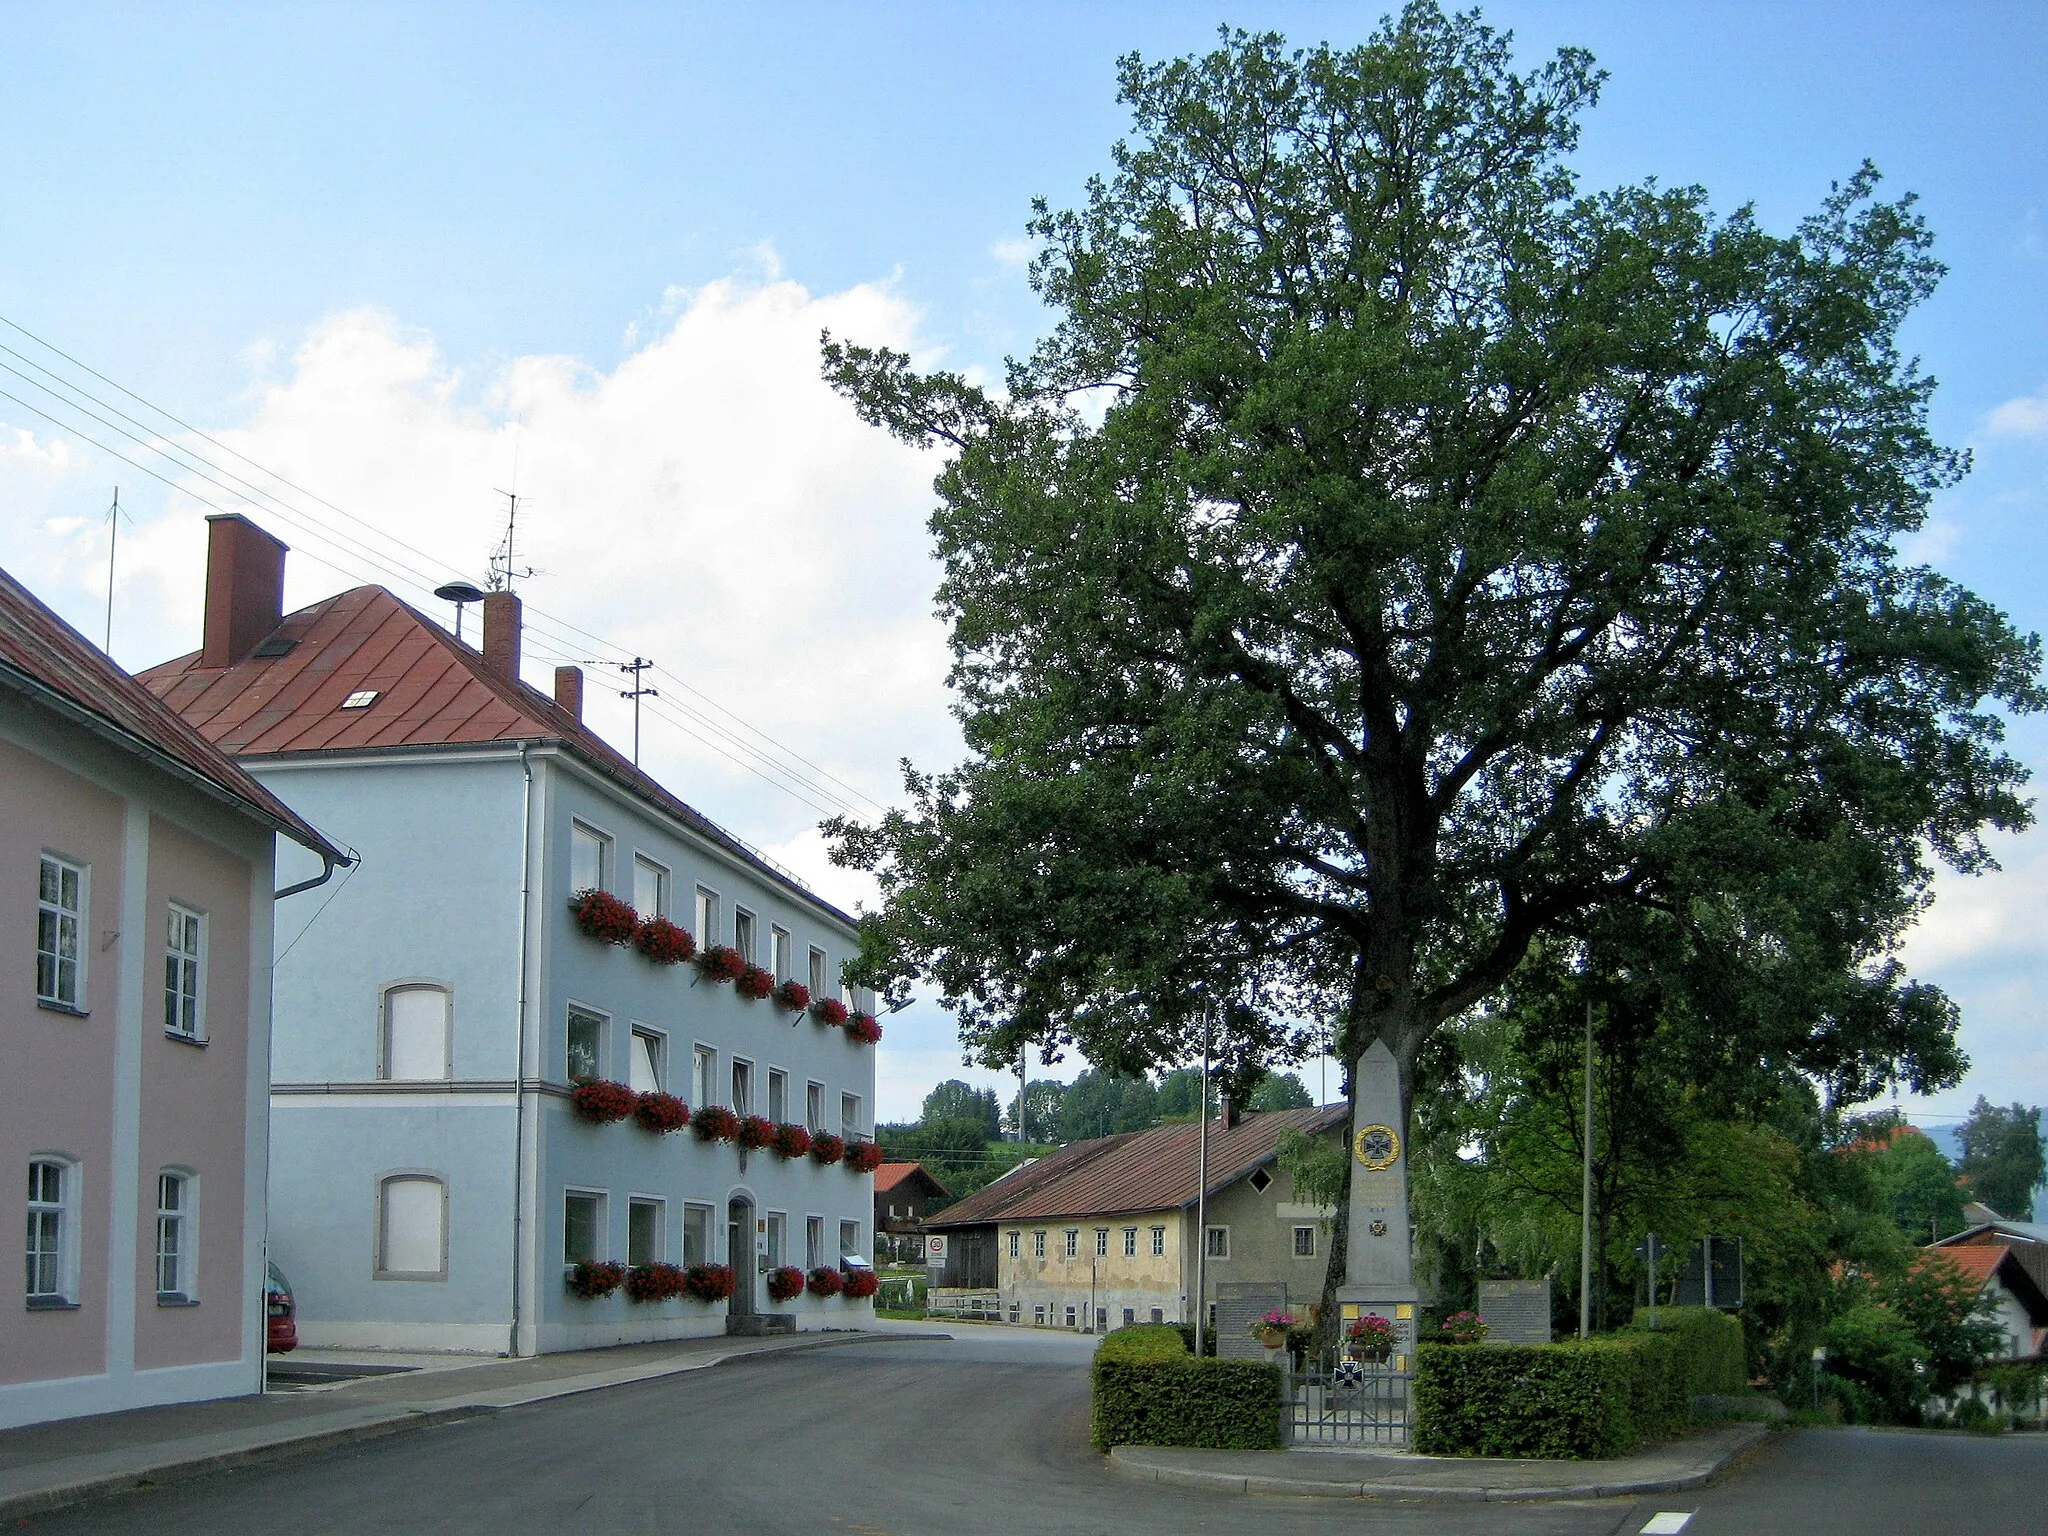 Photo showing: Town hall of Breitenberg, Lower Bavaria